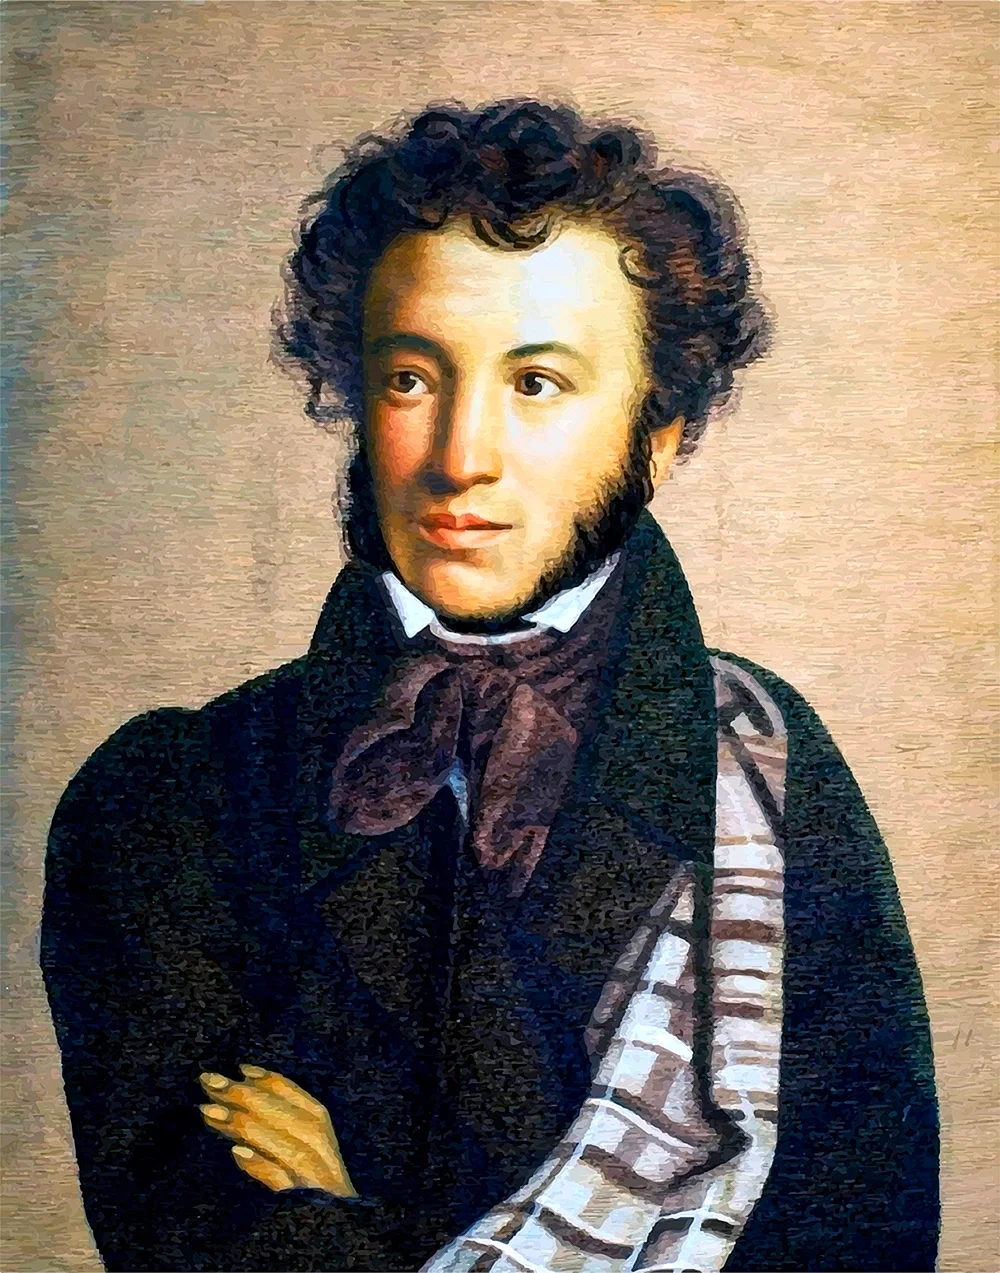 пушкин биография фото